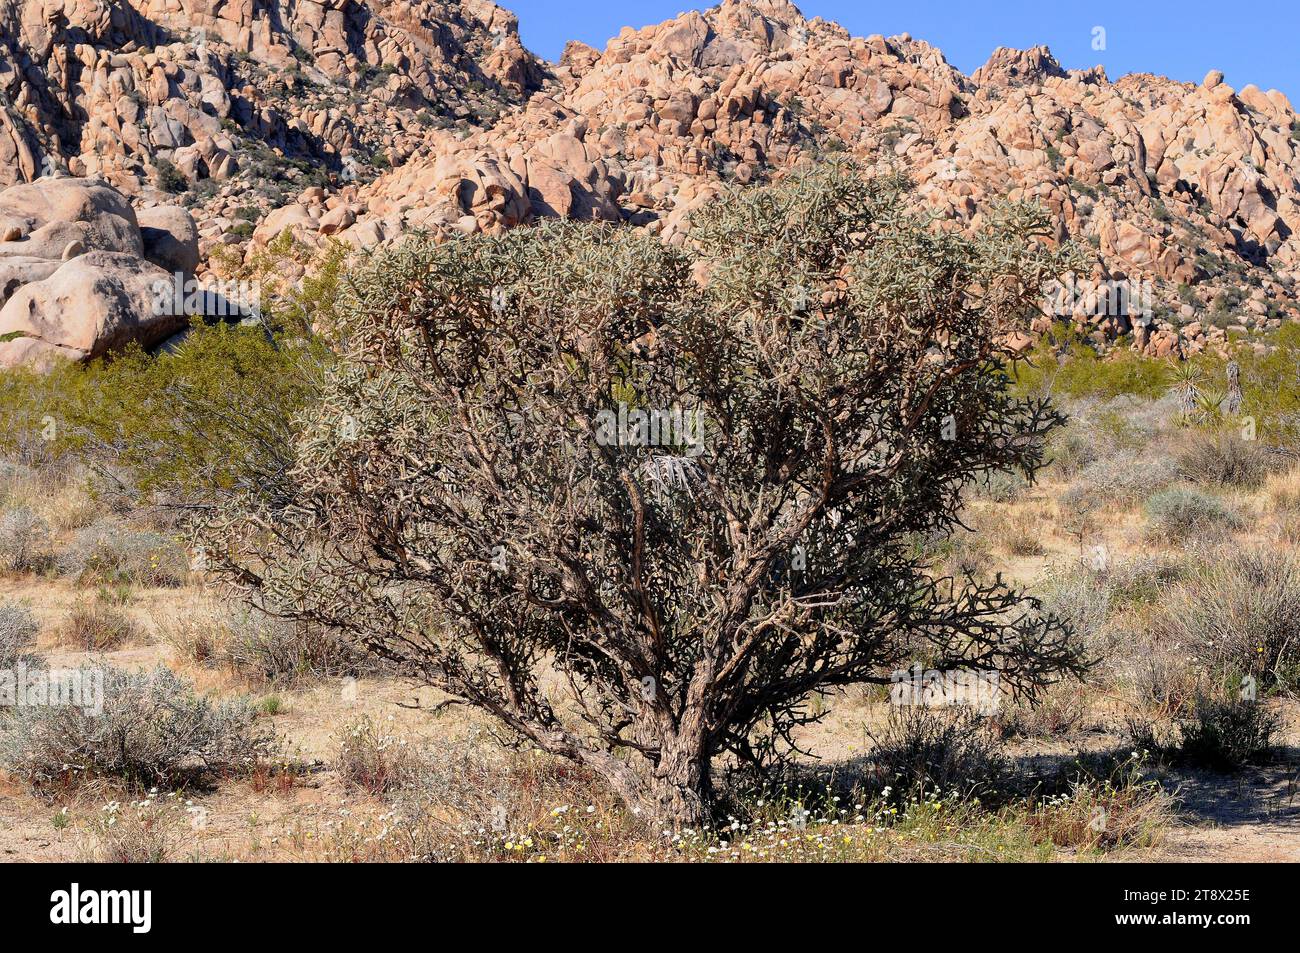 Diamond cholla (Cylindropuntia ramosissima or Opuntia ramosissima) is a cholla cactus native to Mojave Desert (USA) and Northwestern Mexico. This phot Stock Photo